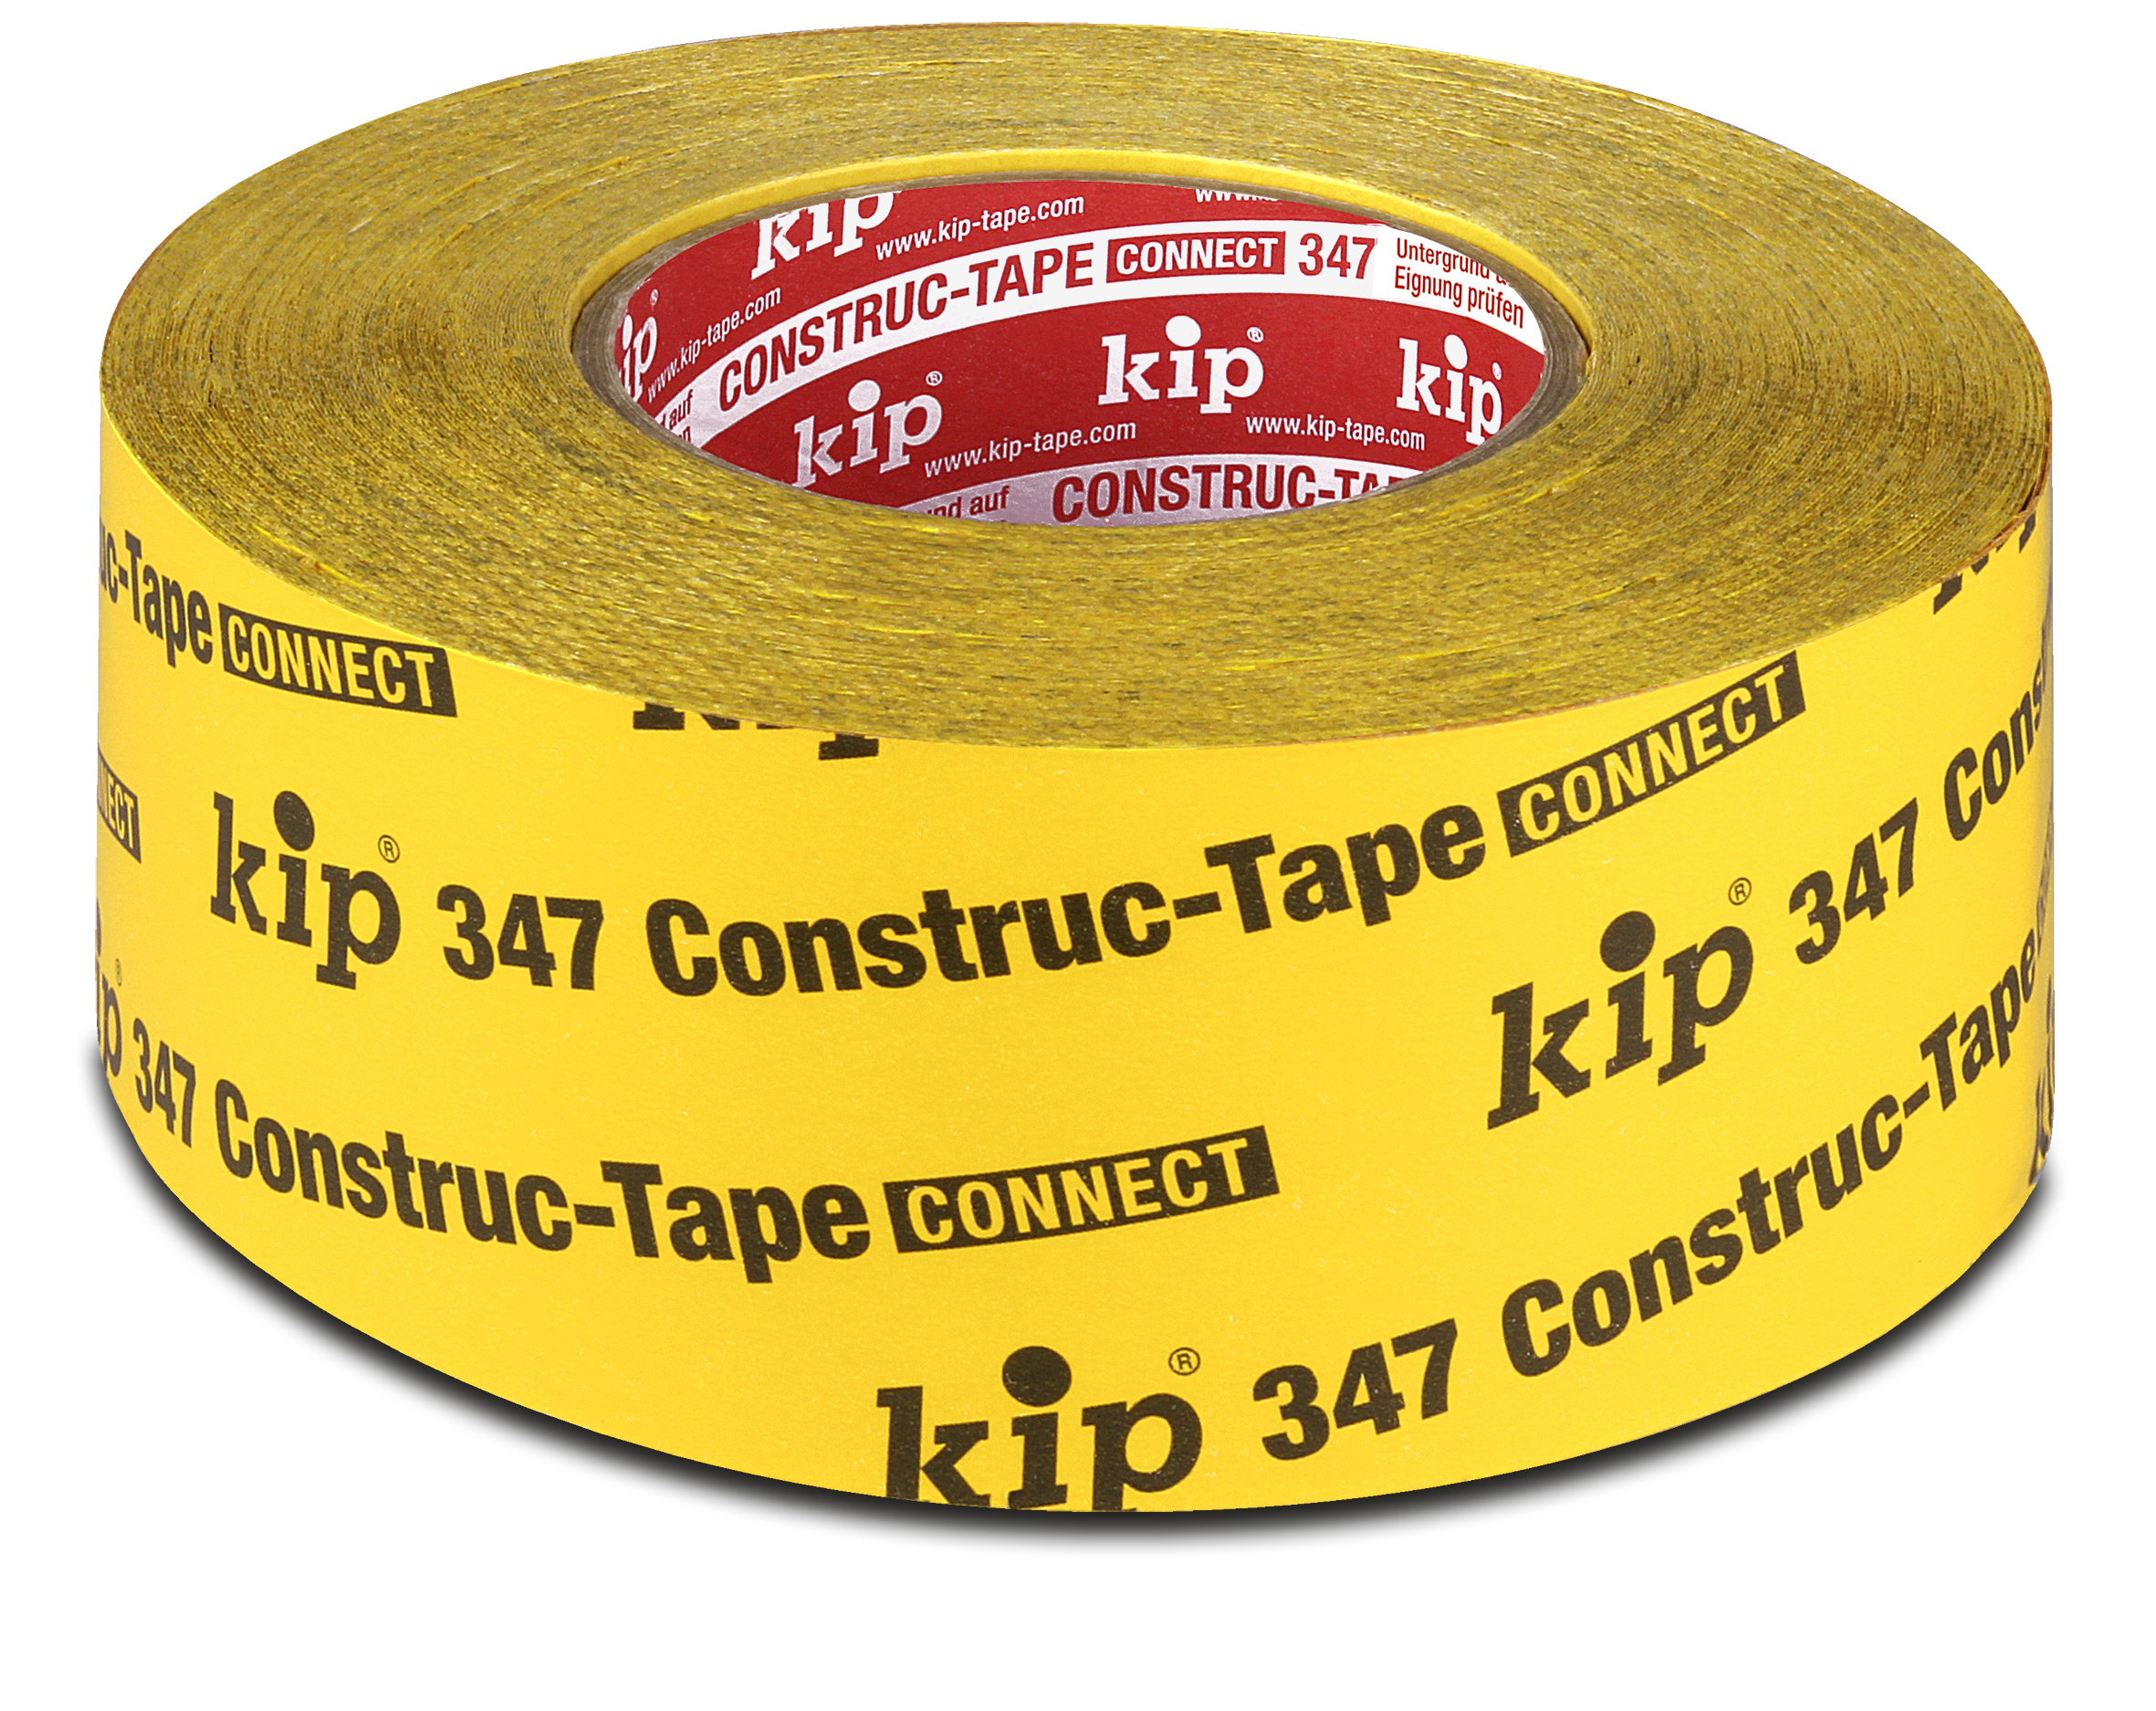 Kip 347 Dachausbauband Construc-Tape Connect